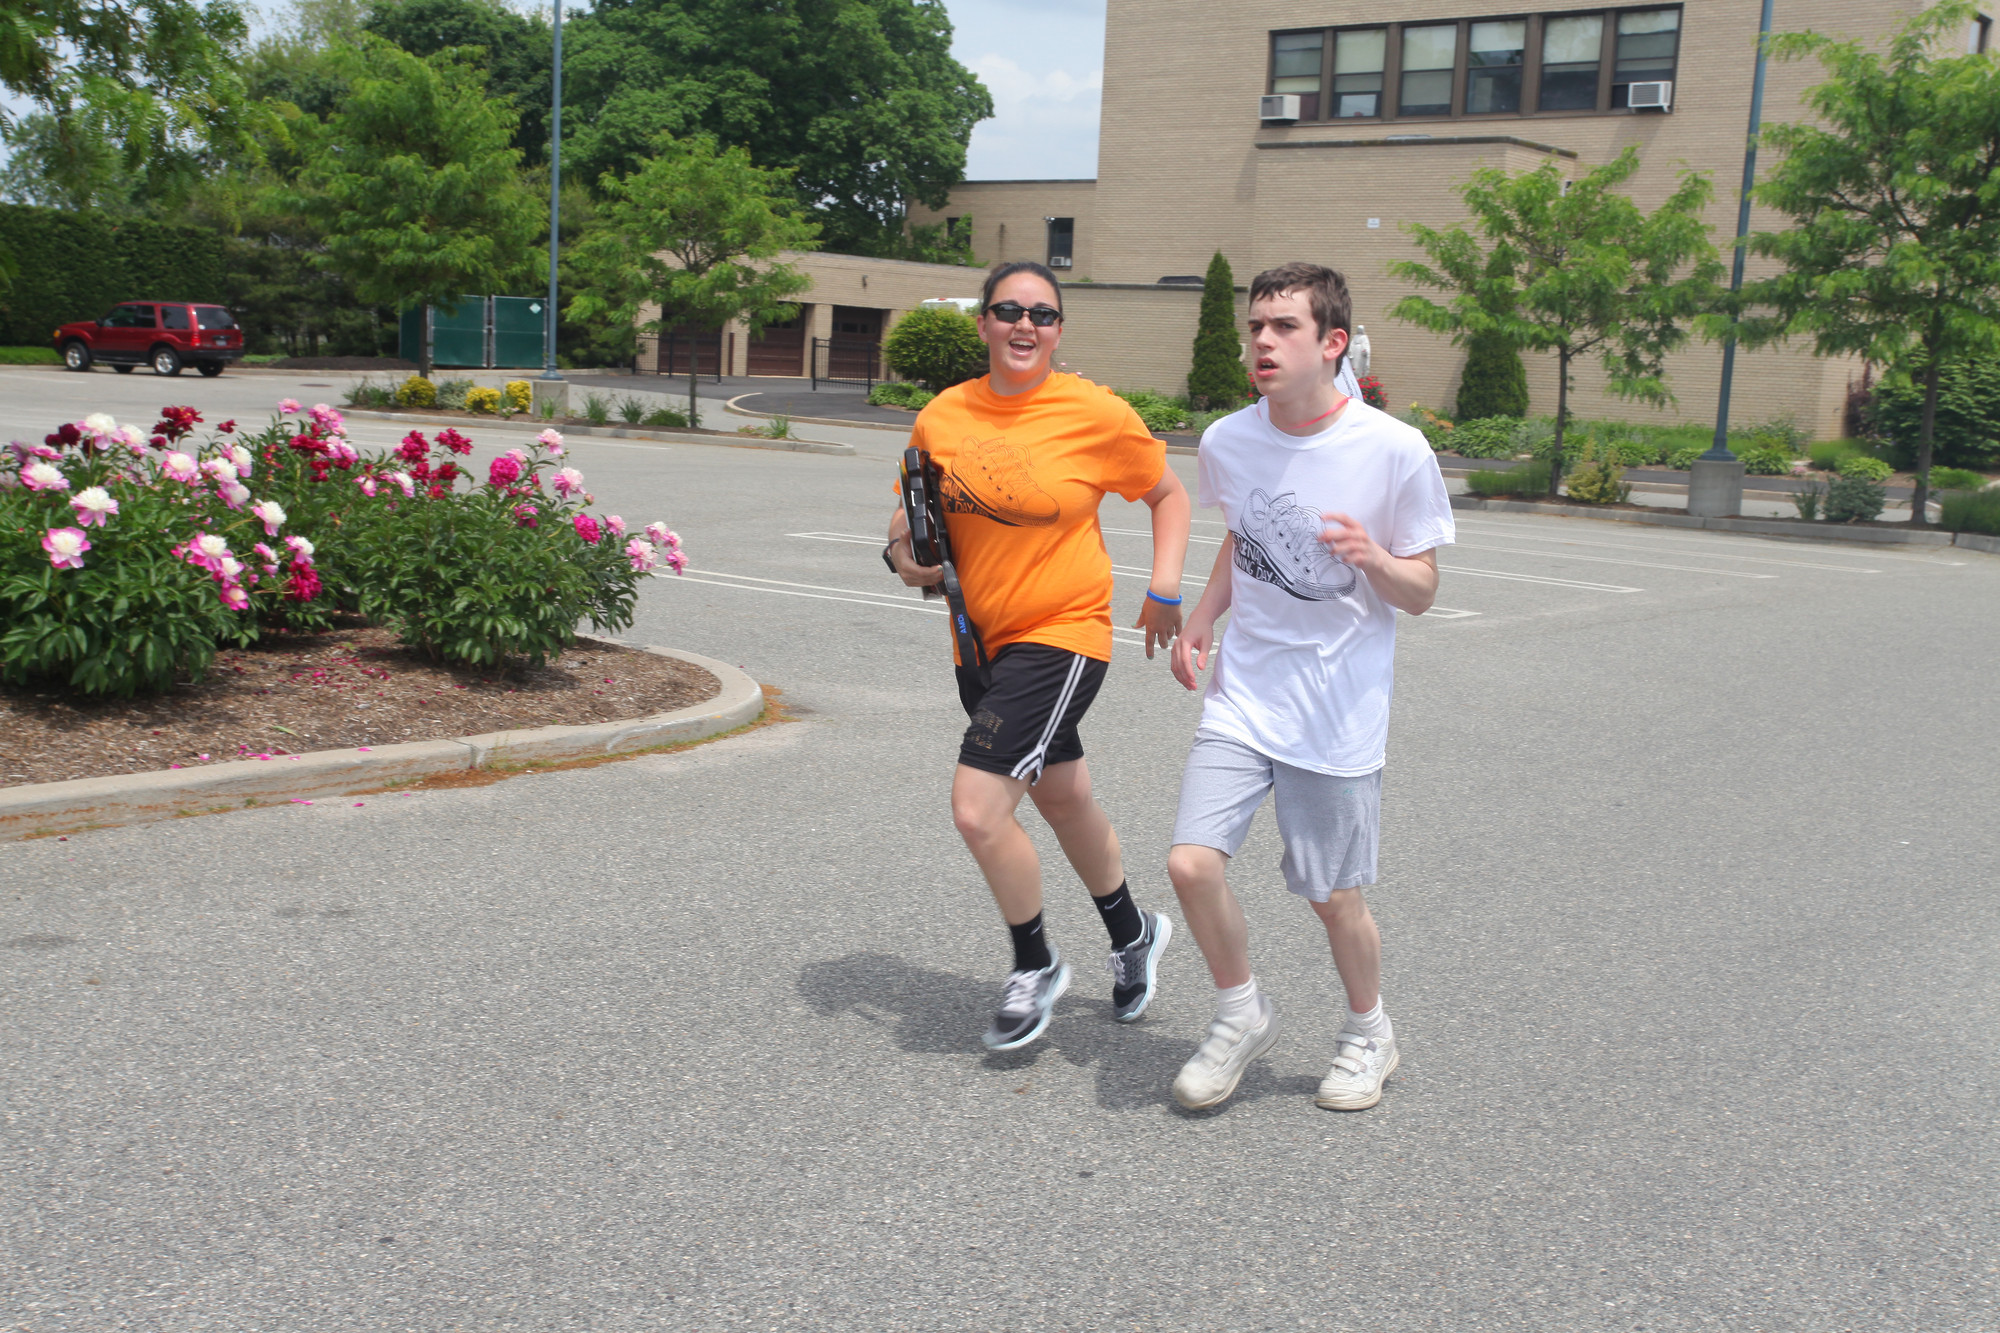 Phys.-ed.- teacher Meaghan Ogara jogged with student Brian.